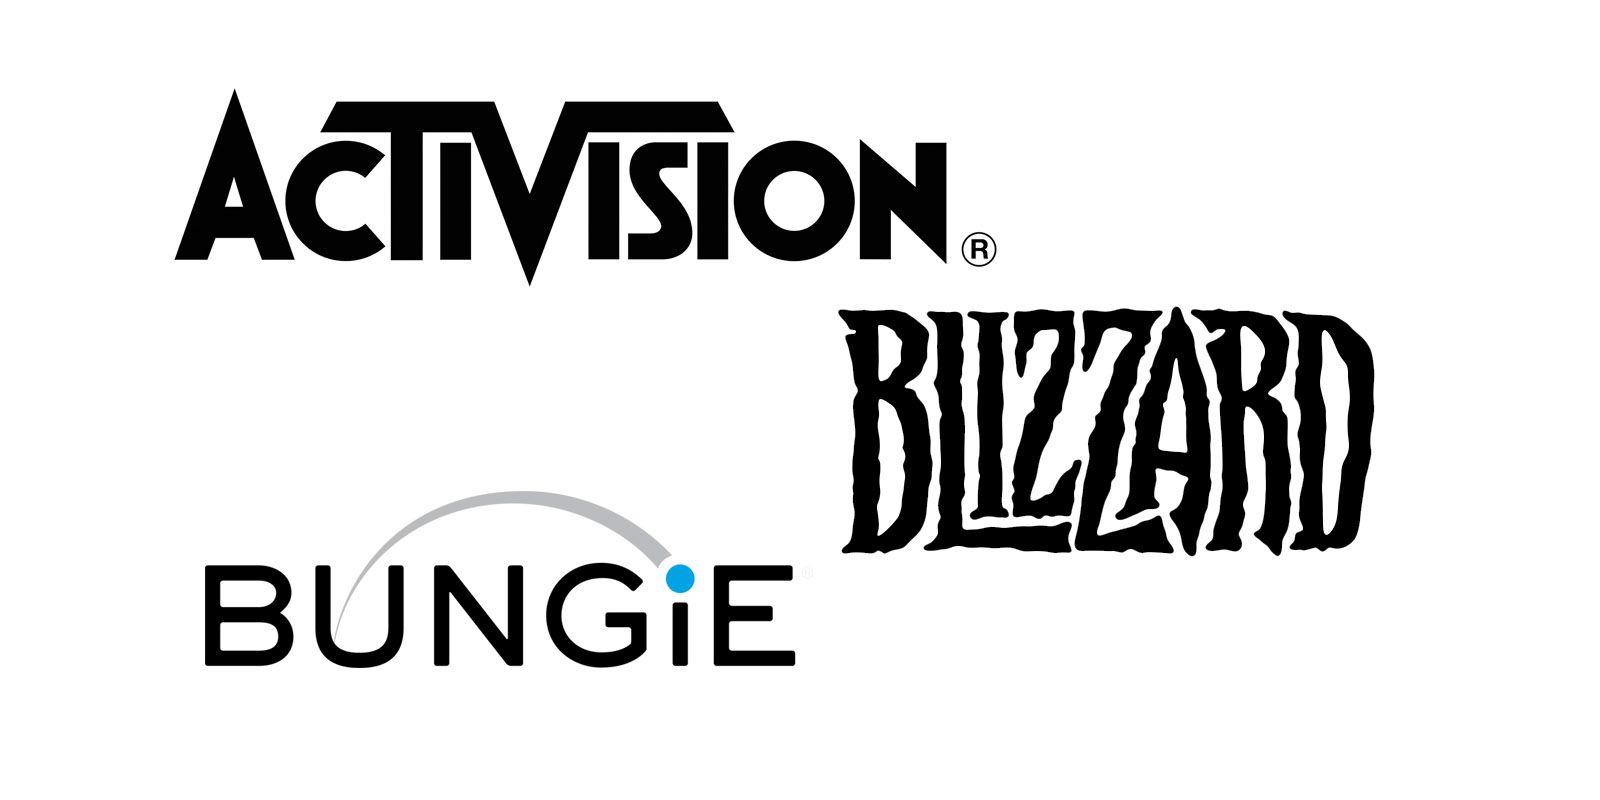 Activision Blizzard Bungie Logos